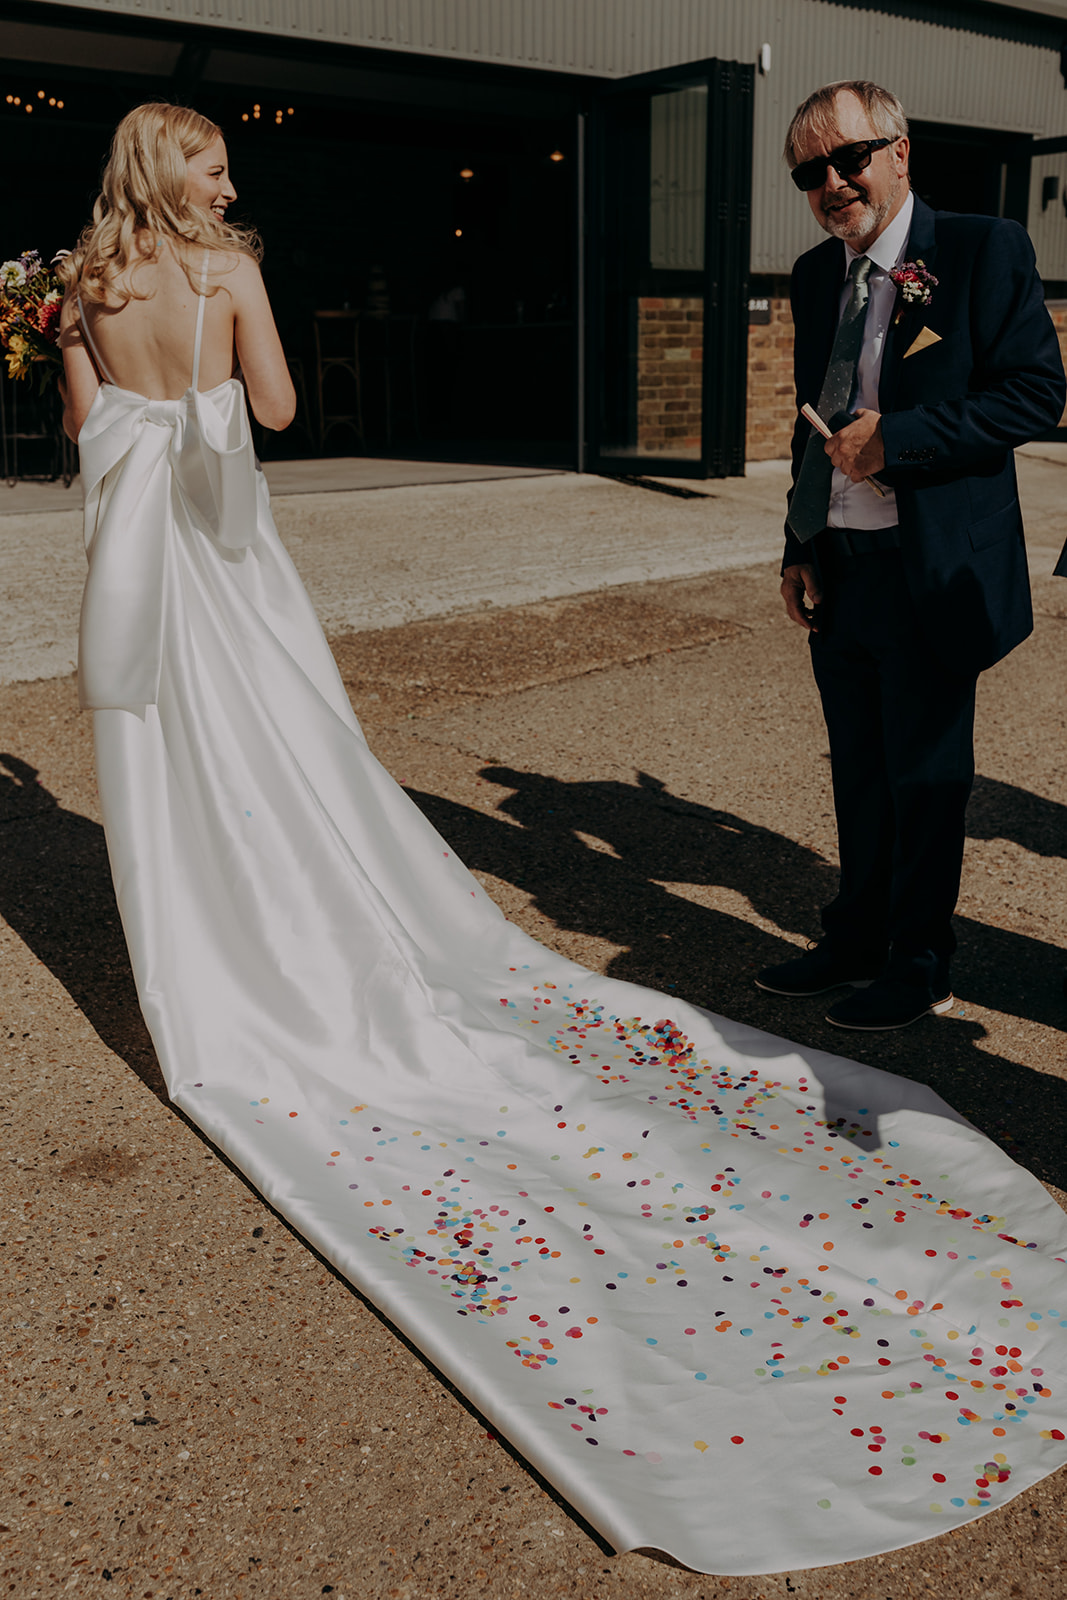  wedding dress with giant bow